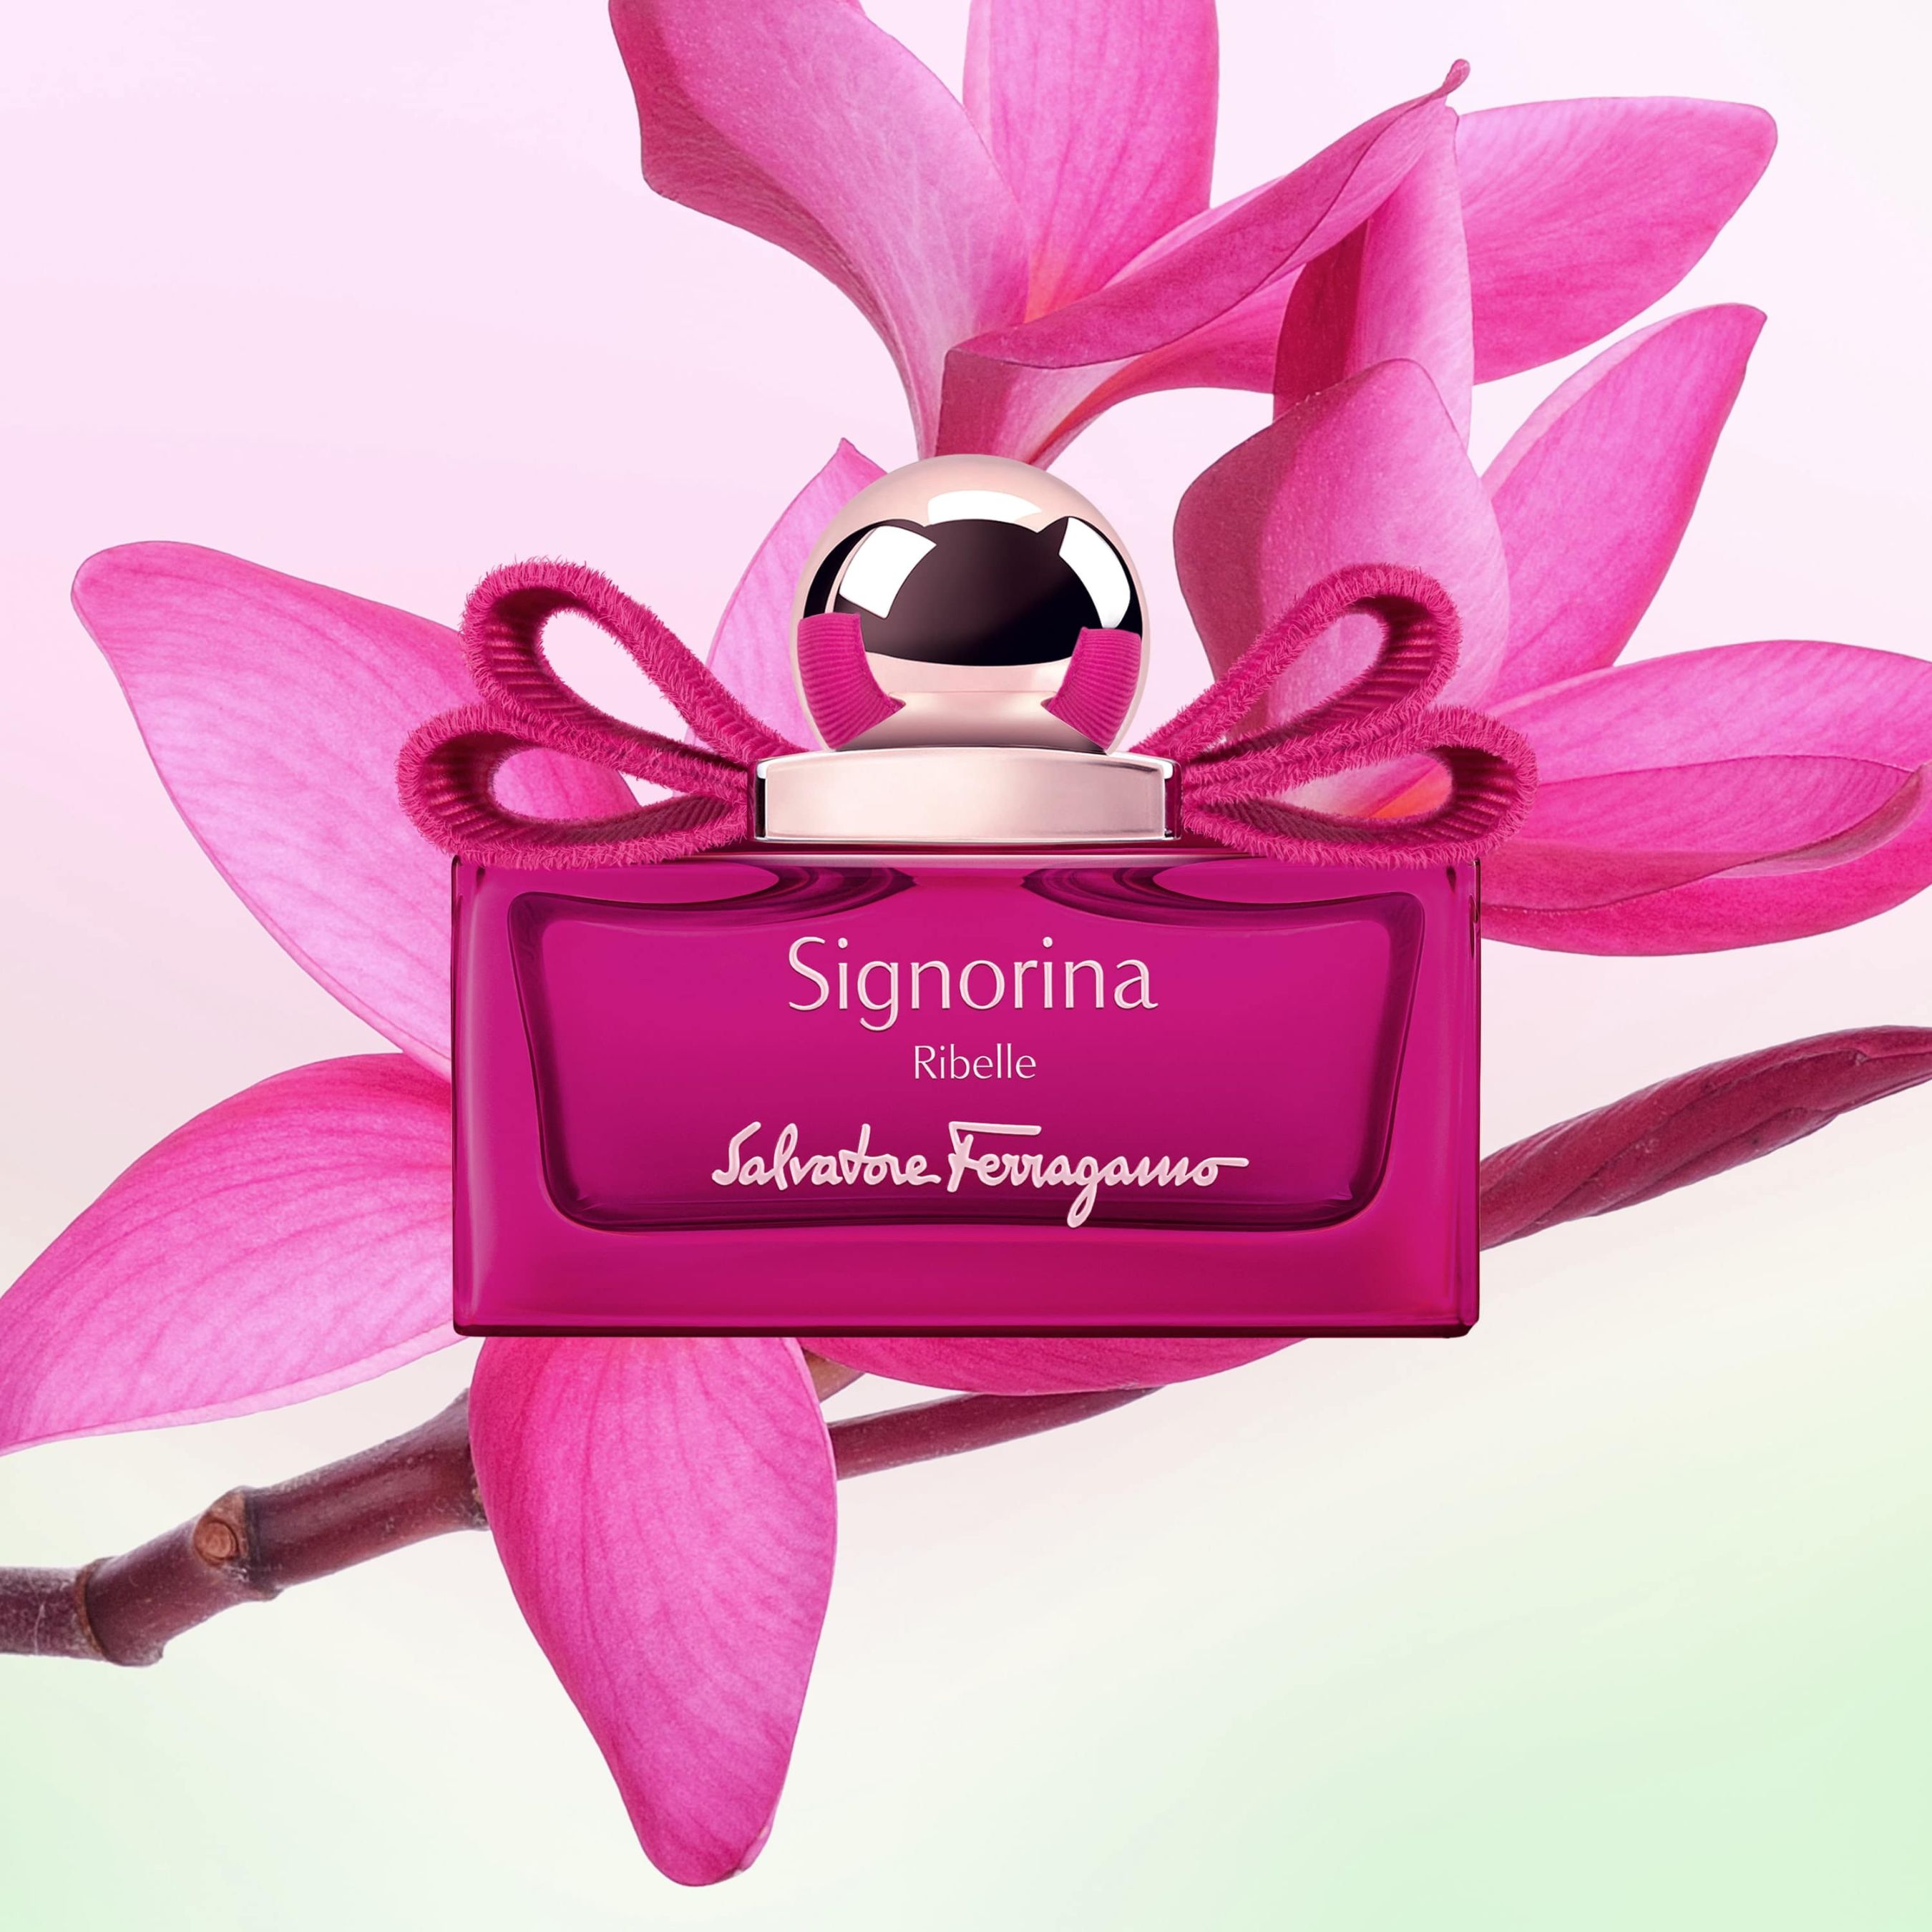 Salvatore Ferragamo nước hoa Salvatore Ferragamo AH Perfumes nước hoa AH Perfumes 3 Cùng Salvatore Ferragamo kể câu chuyện của riêng mình